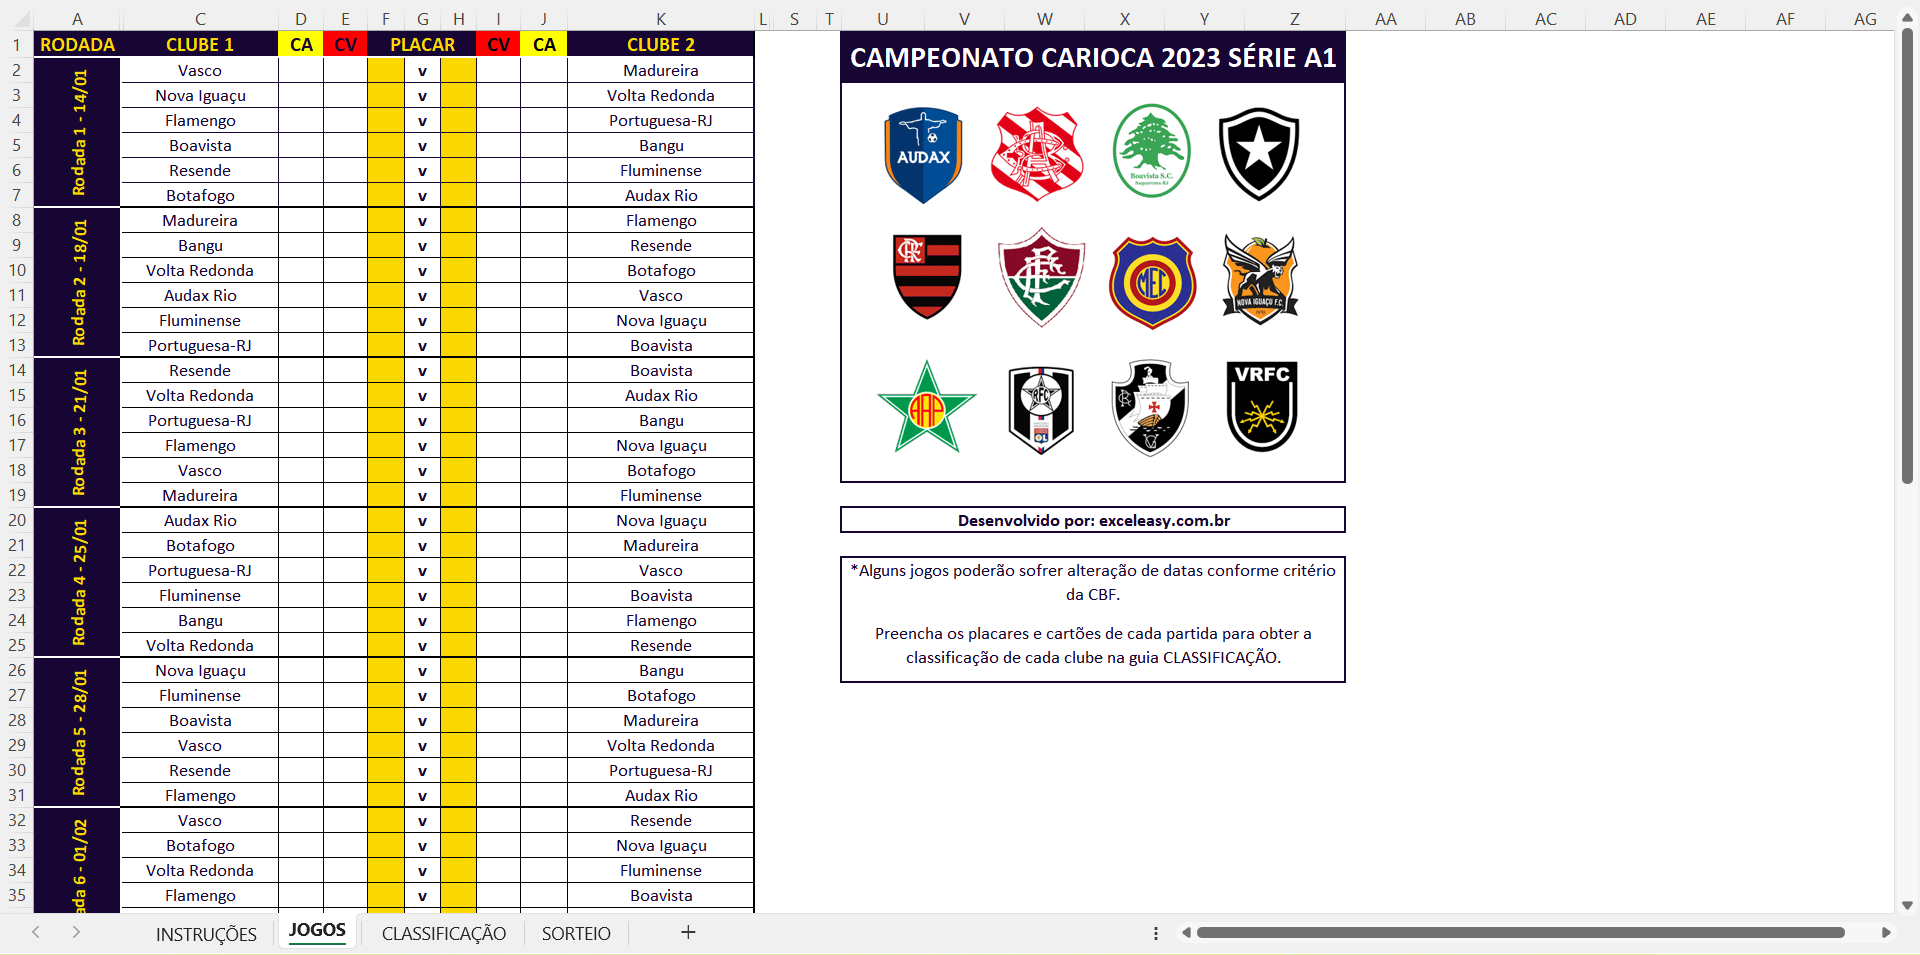 Como funciona a Tabela do Campeonato Carioca 2023 no Excel